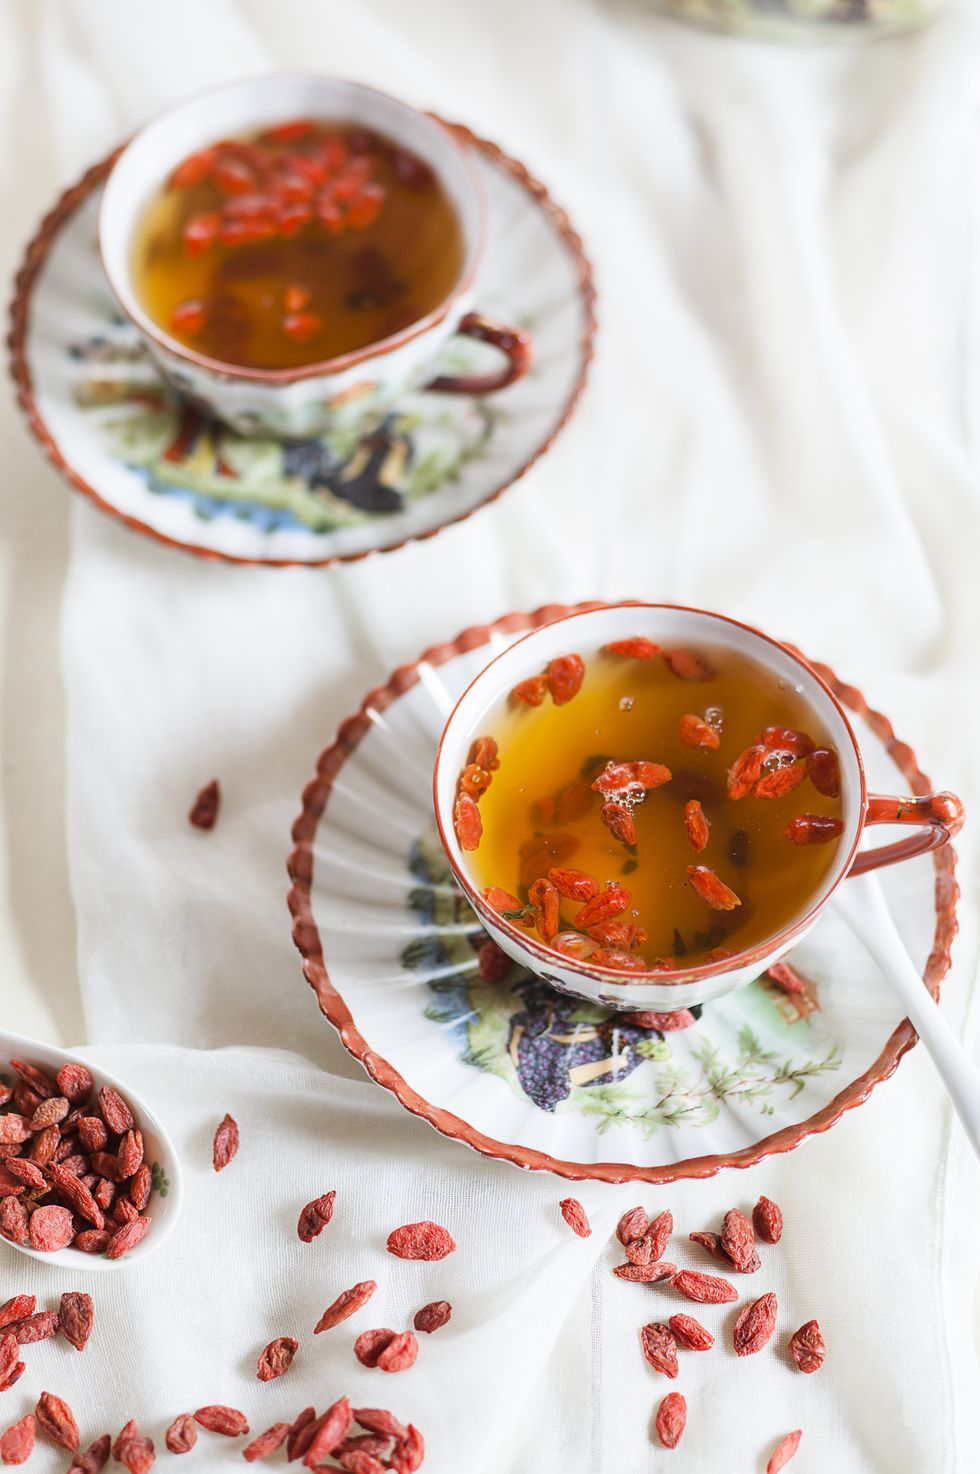 Two cups of green jasmine tea with dried Goji berries, Lycium barbarum